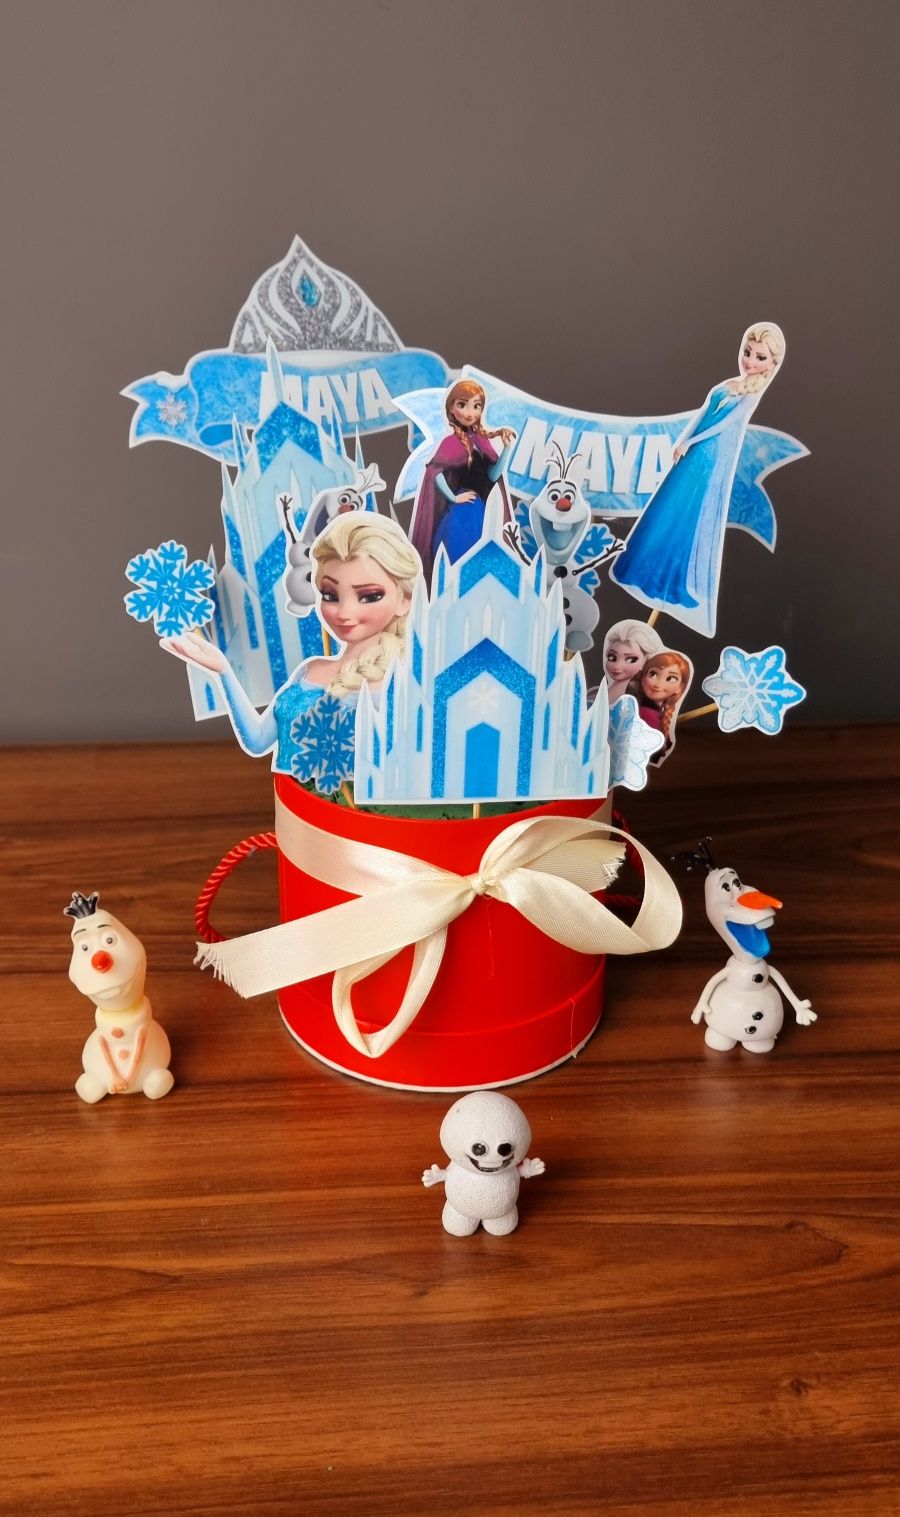 Toppere tort cu tema Ana și Elsa